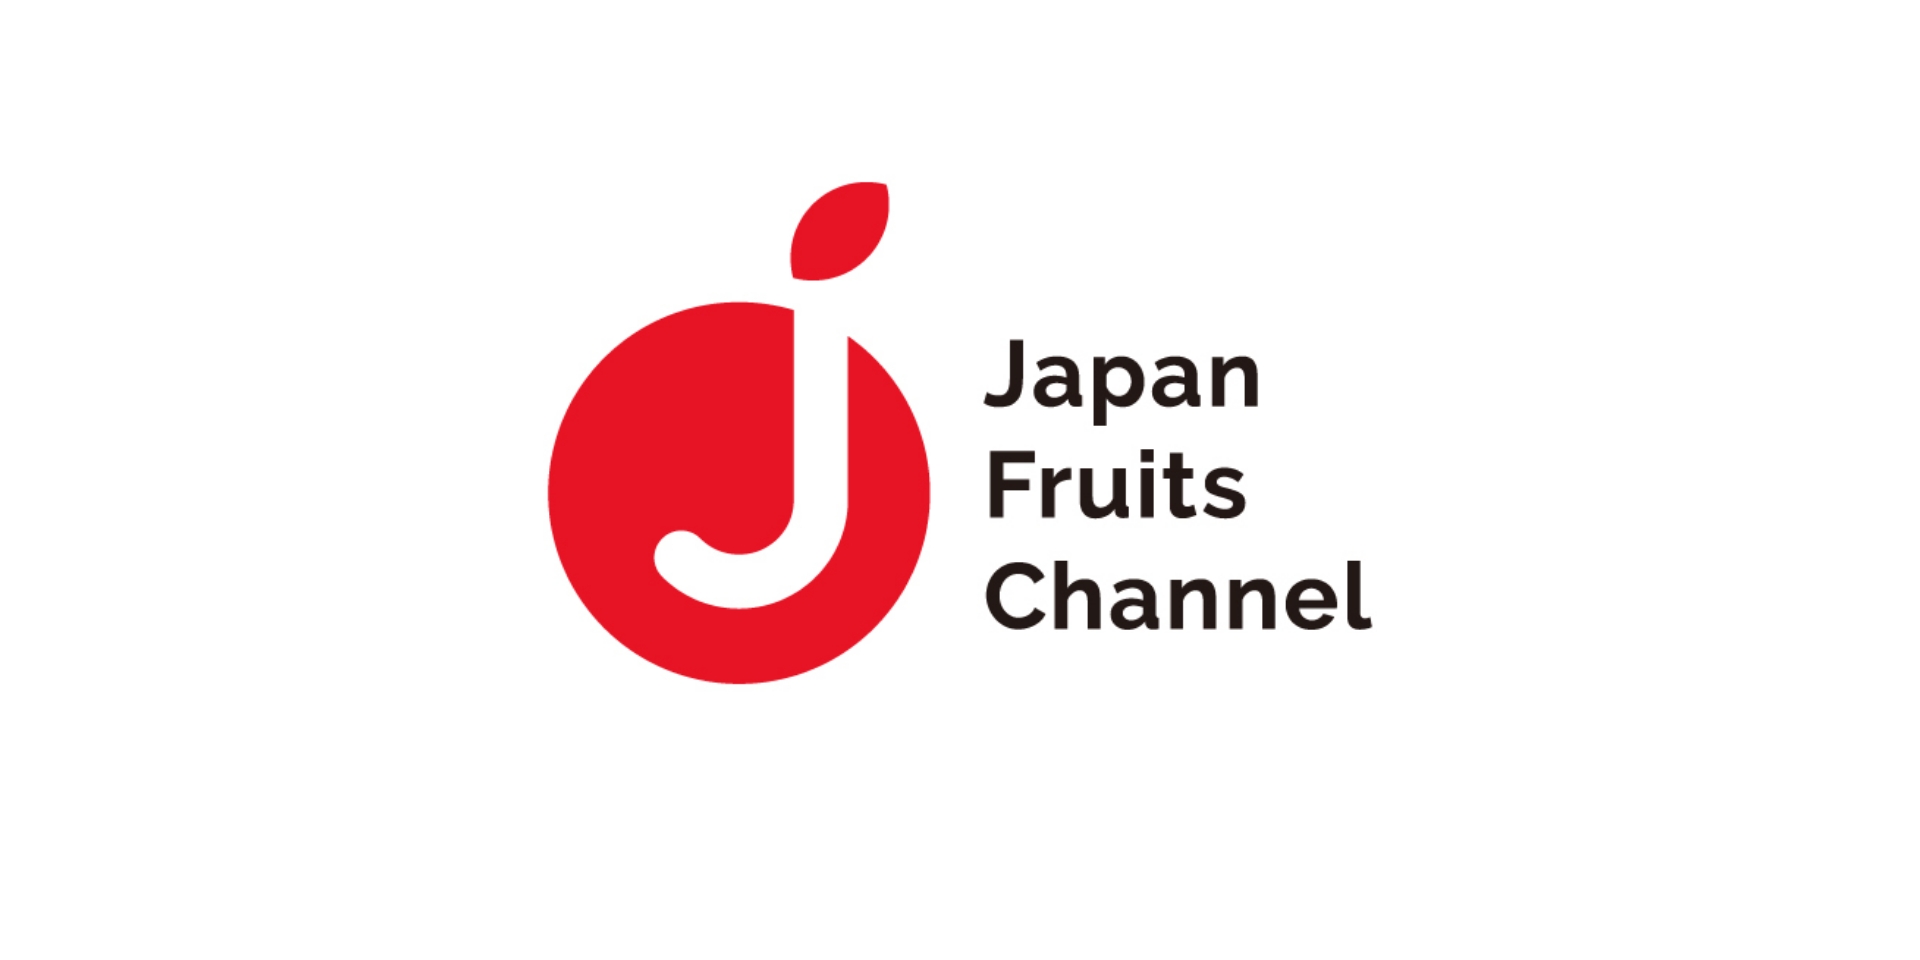 Japan Fruits Channel